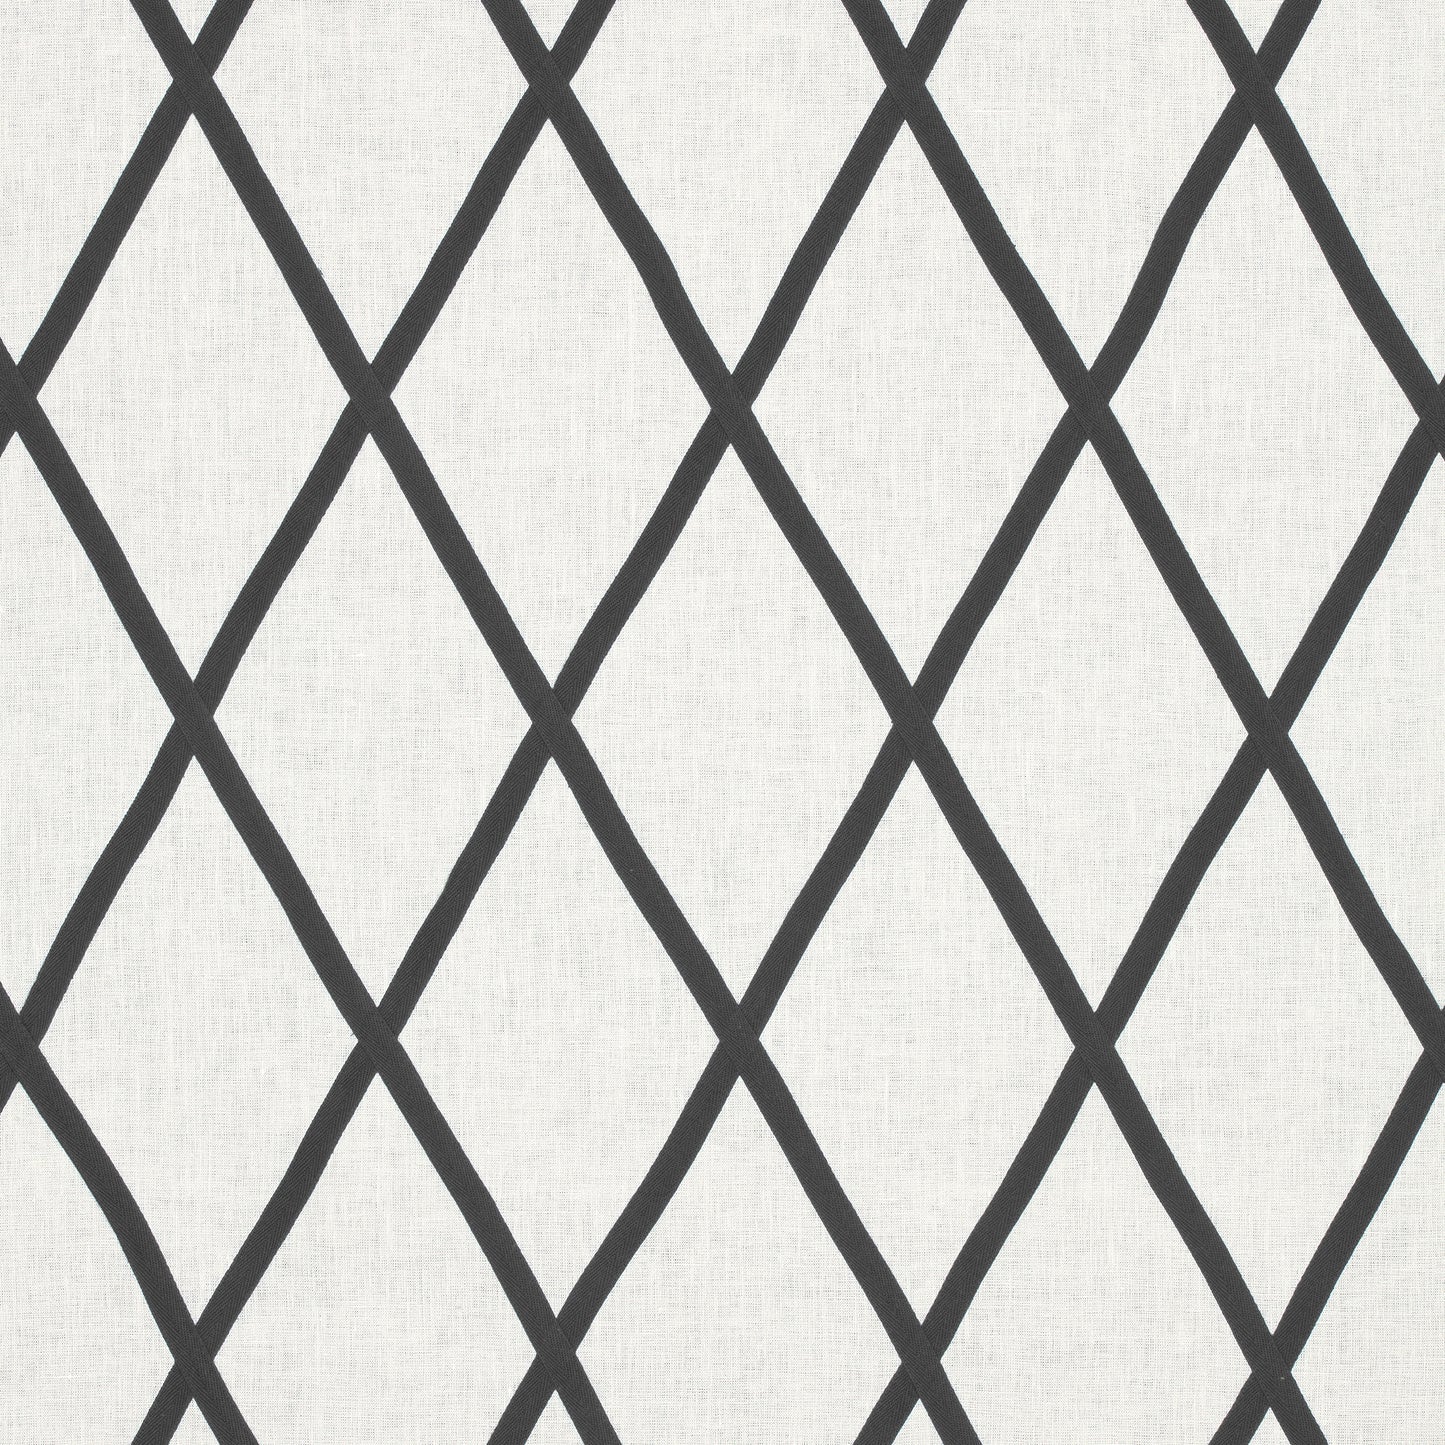 Purchase  Ann French Fabric Product# AW78712  pattern name  Tarascon Trellis Applique